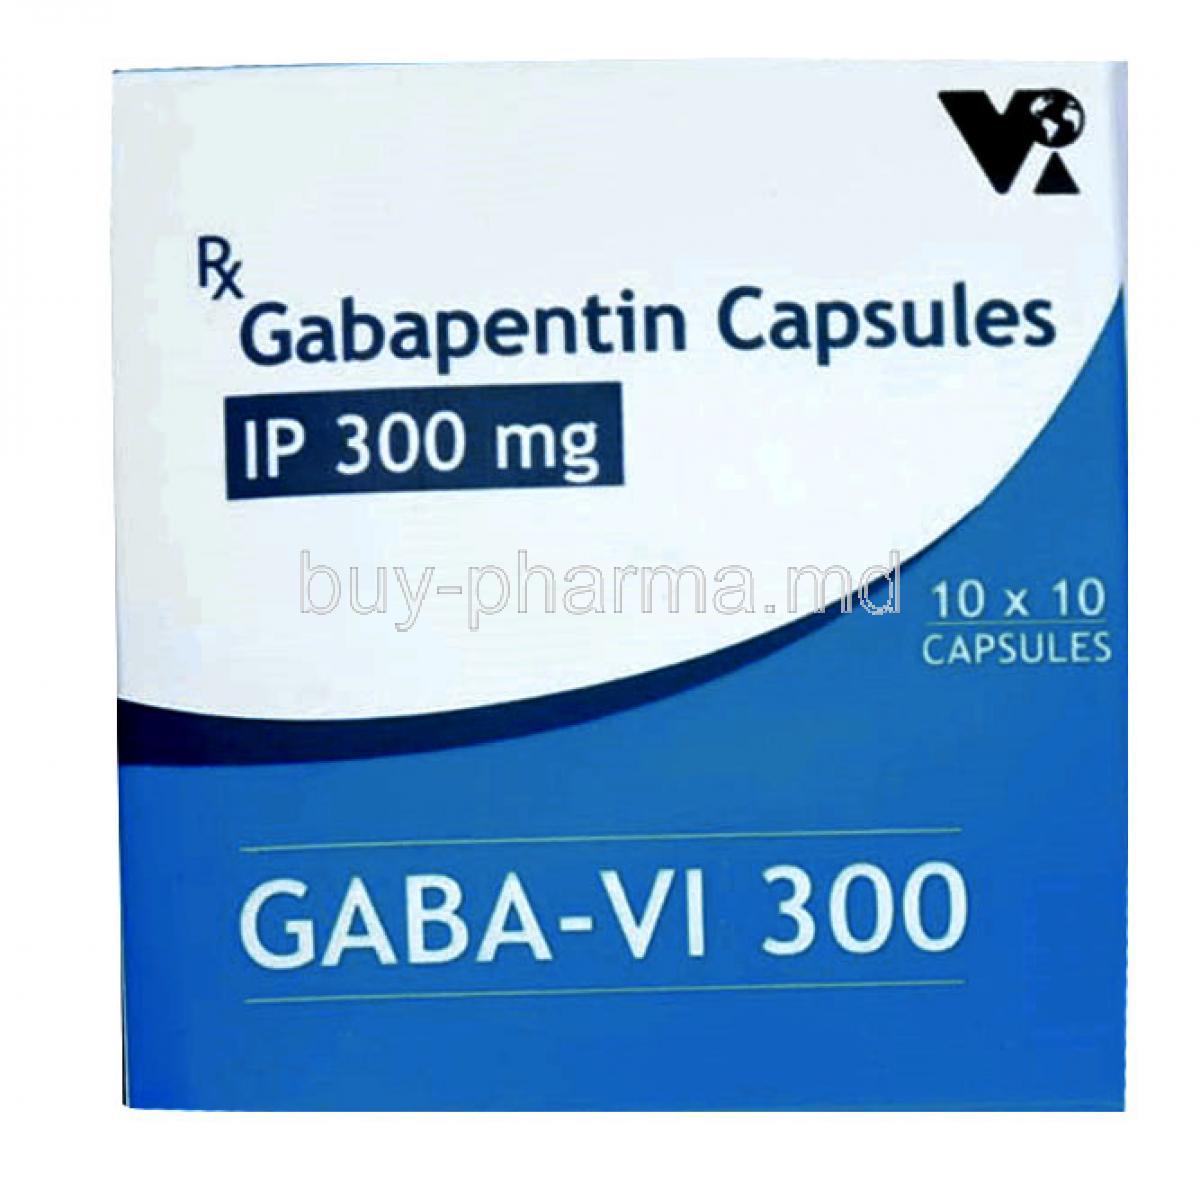 Gaba VI 300, Gabapentin 300mg, Capsule, VEA Impex, Box